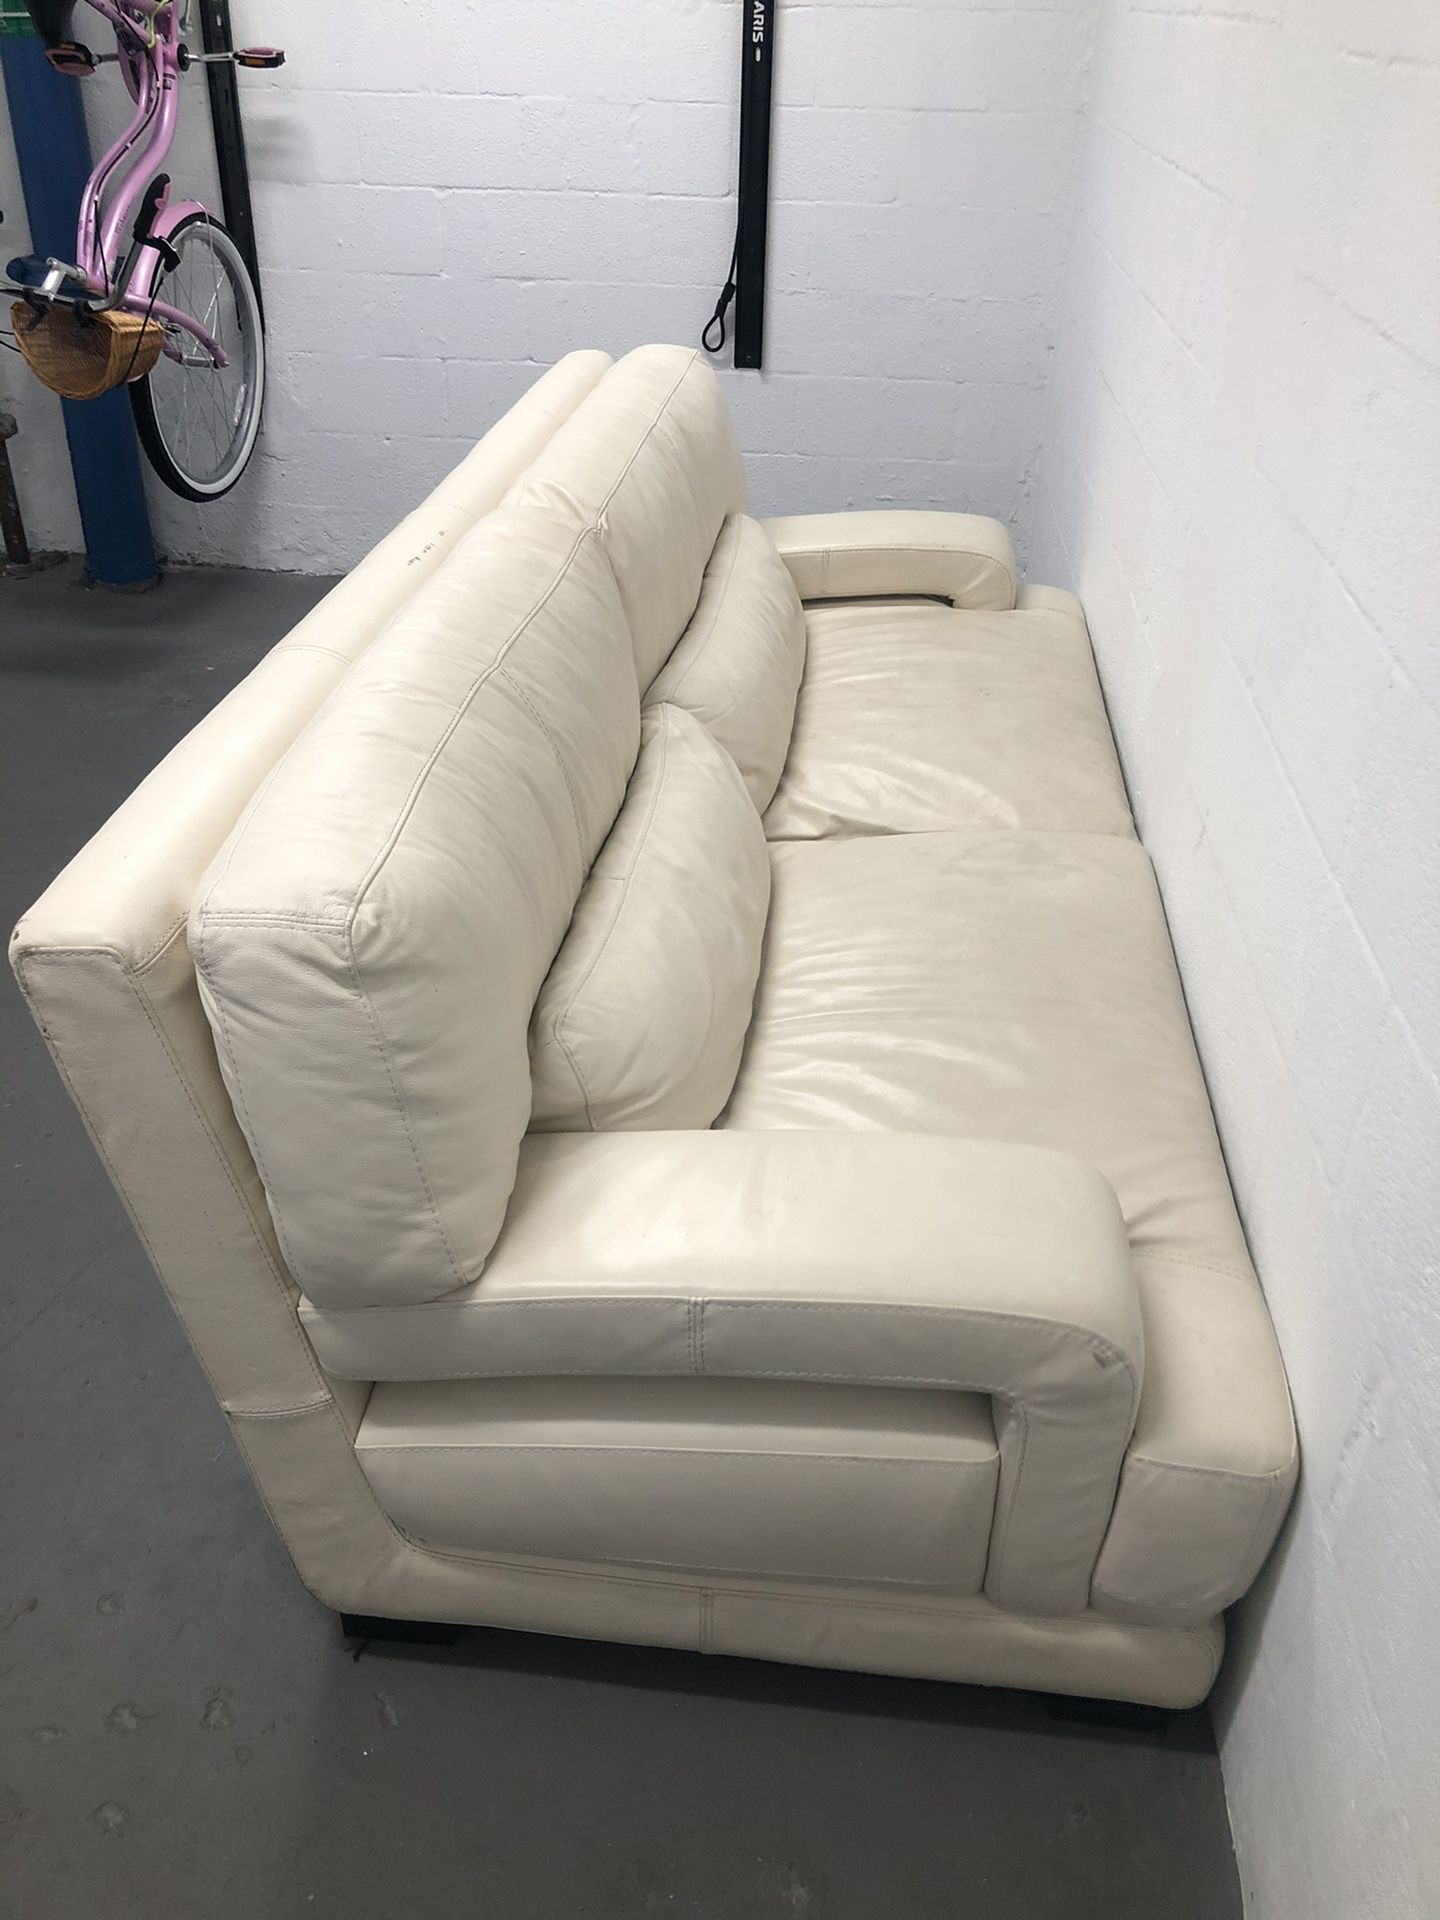 White / Cream / Bone LEATHER couch!